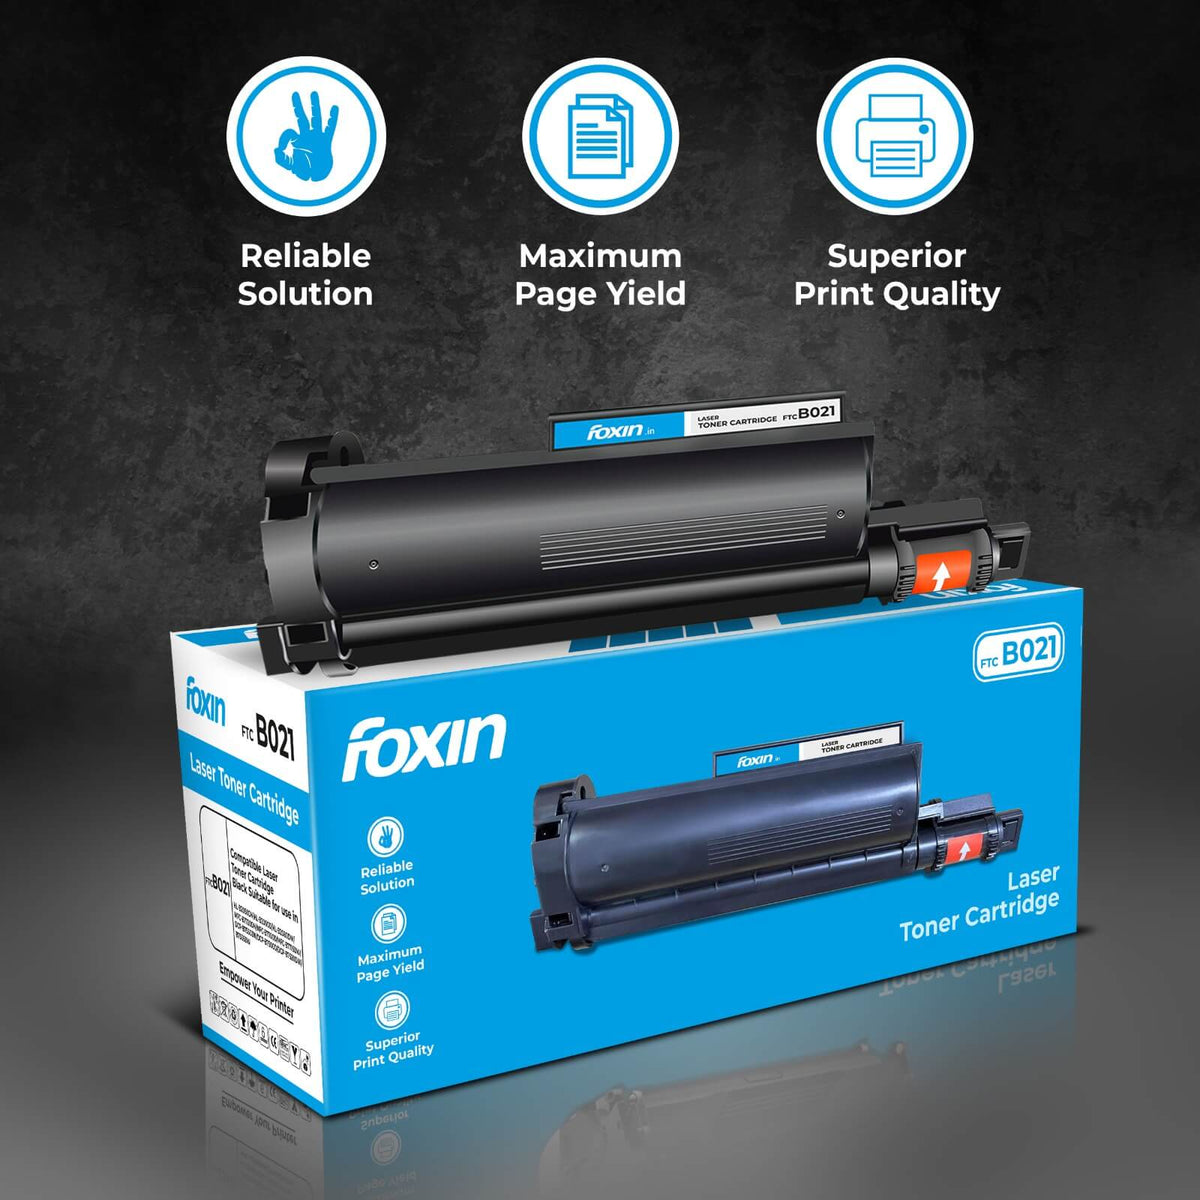 Foxin FTC B021 Toner Cartridge for Brother TN B021 Toner Cartridge Compatible for Brother Printer DCP-B7500D, DCP-B7535DW, HL-B2000D, HL-B2080DW, MFC-B7715DW